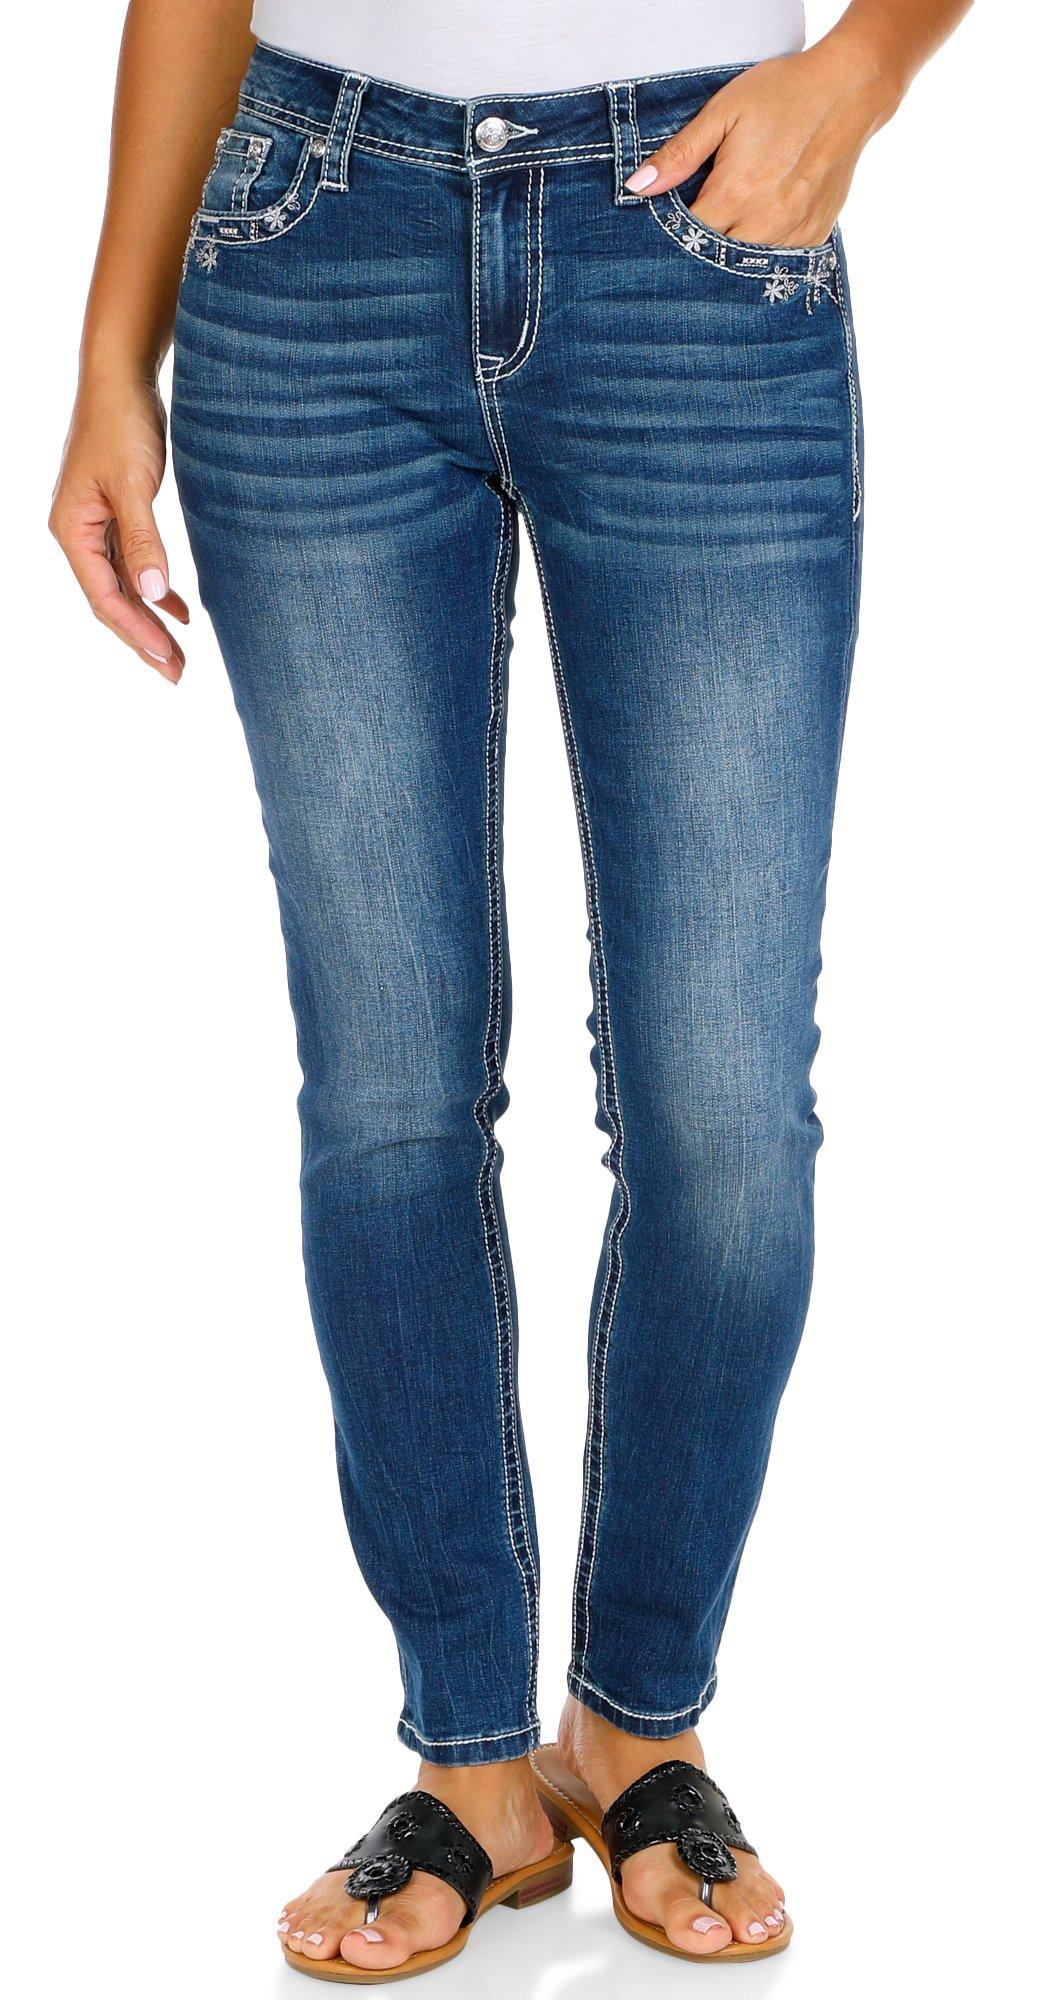 Women's Embellished Skinny Jeans